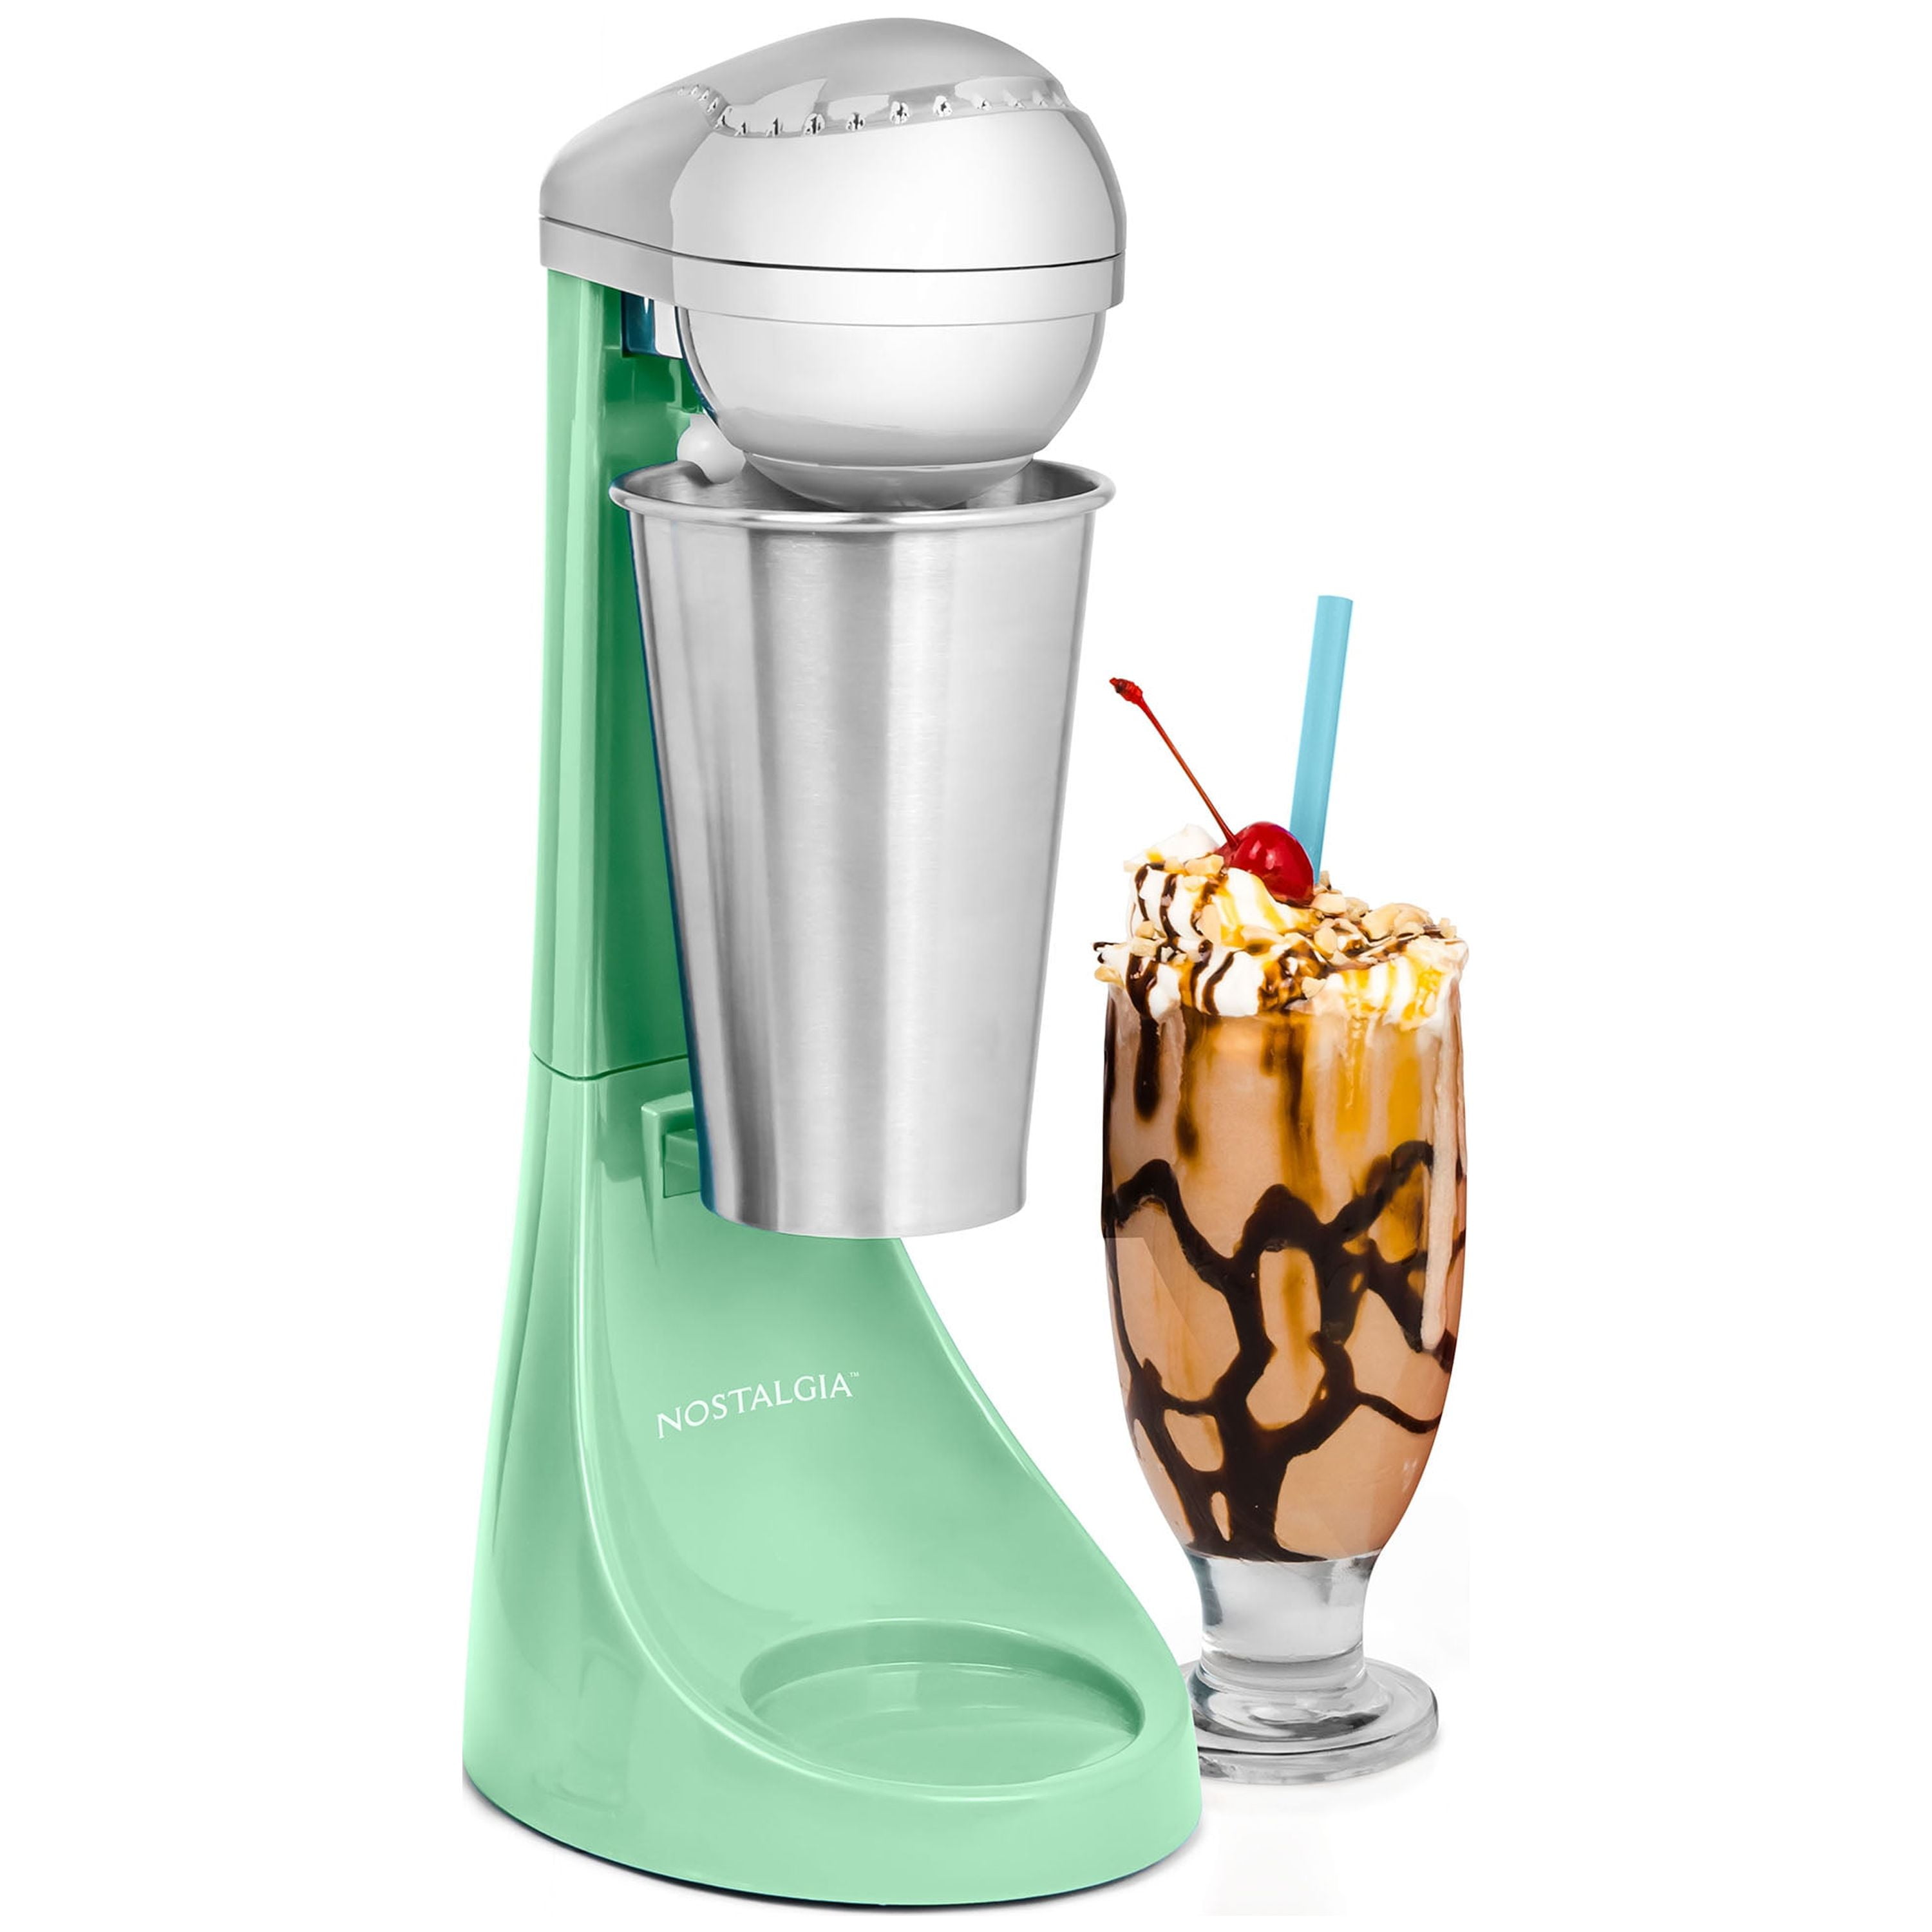 2-Speed 16-Oz Nostalgia Milkshake Maker Shake Blender Retro Kitchen Appliance (Jade) $25.50  + Free S&H w/ Walmart+ or $35+